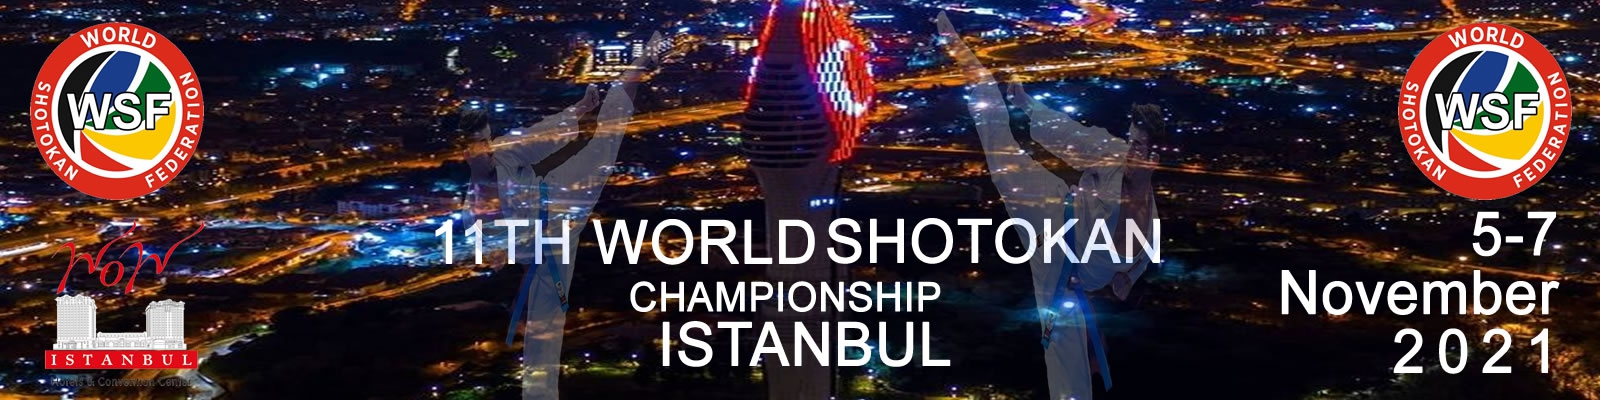 set online wsf 11th world shotokan championship istanbul